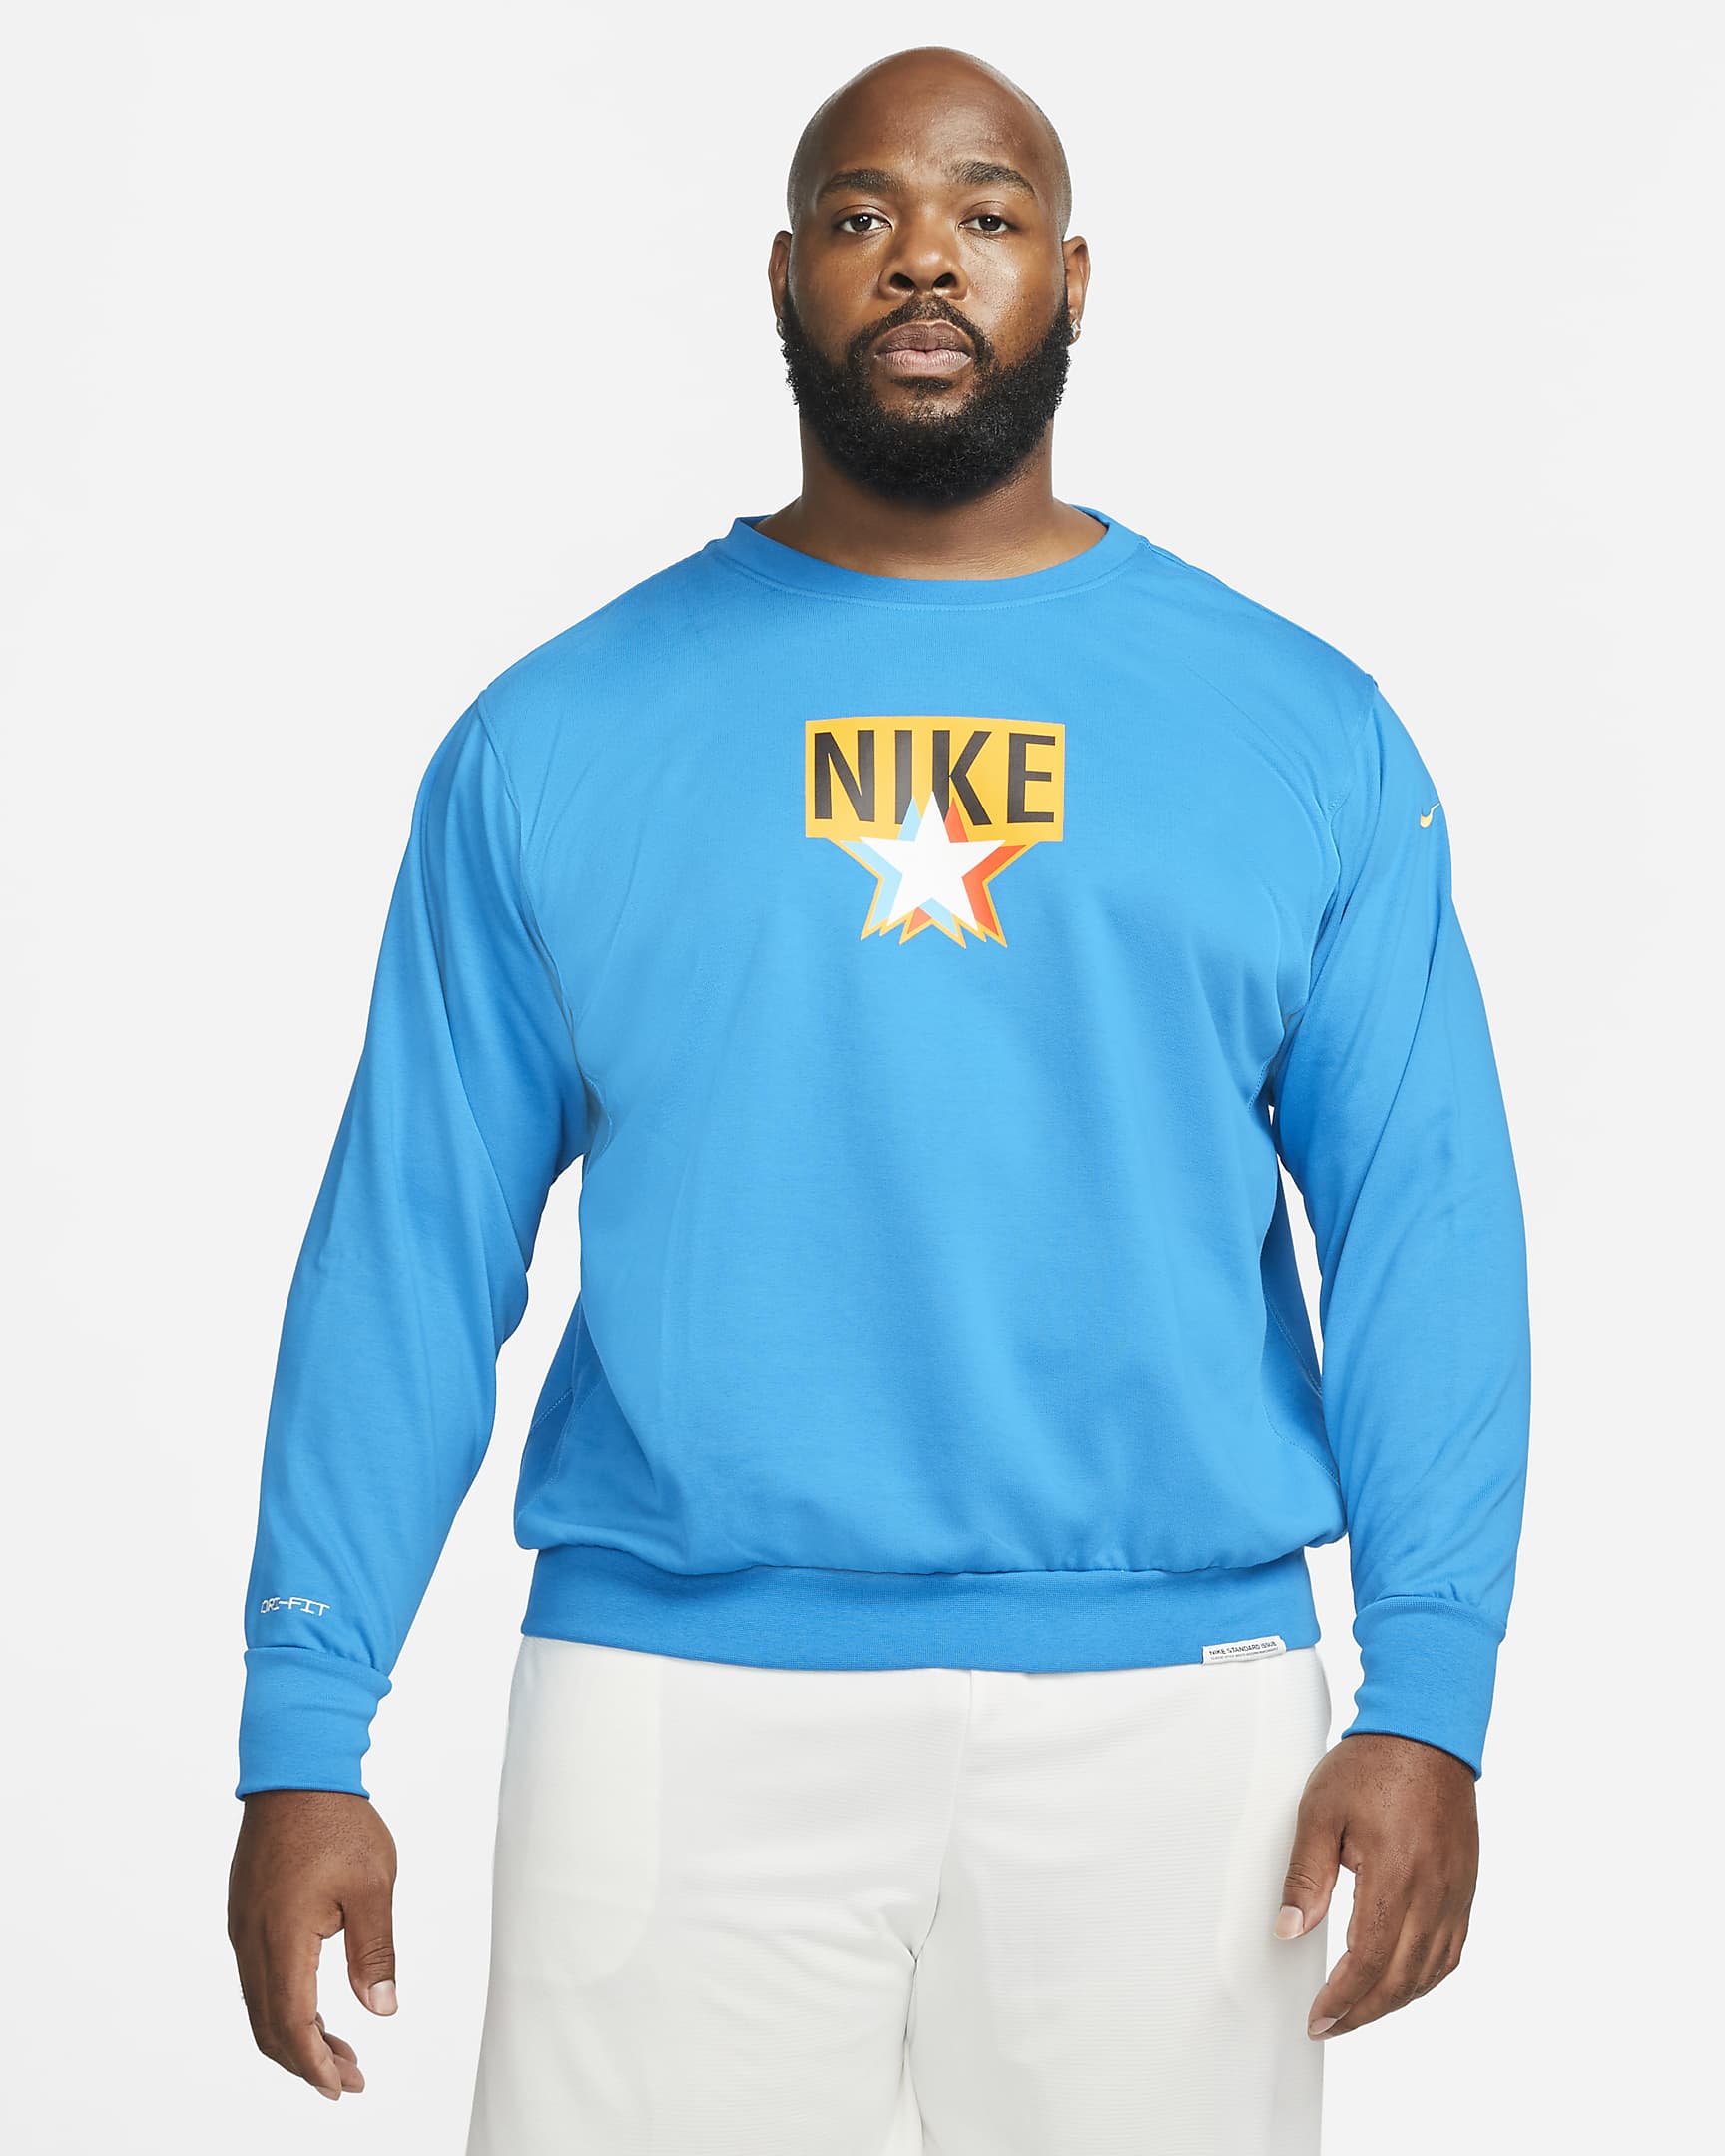 nike-standard-issue-mens-basketball-crew-sweatshirt-5K6rh1.png